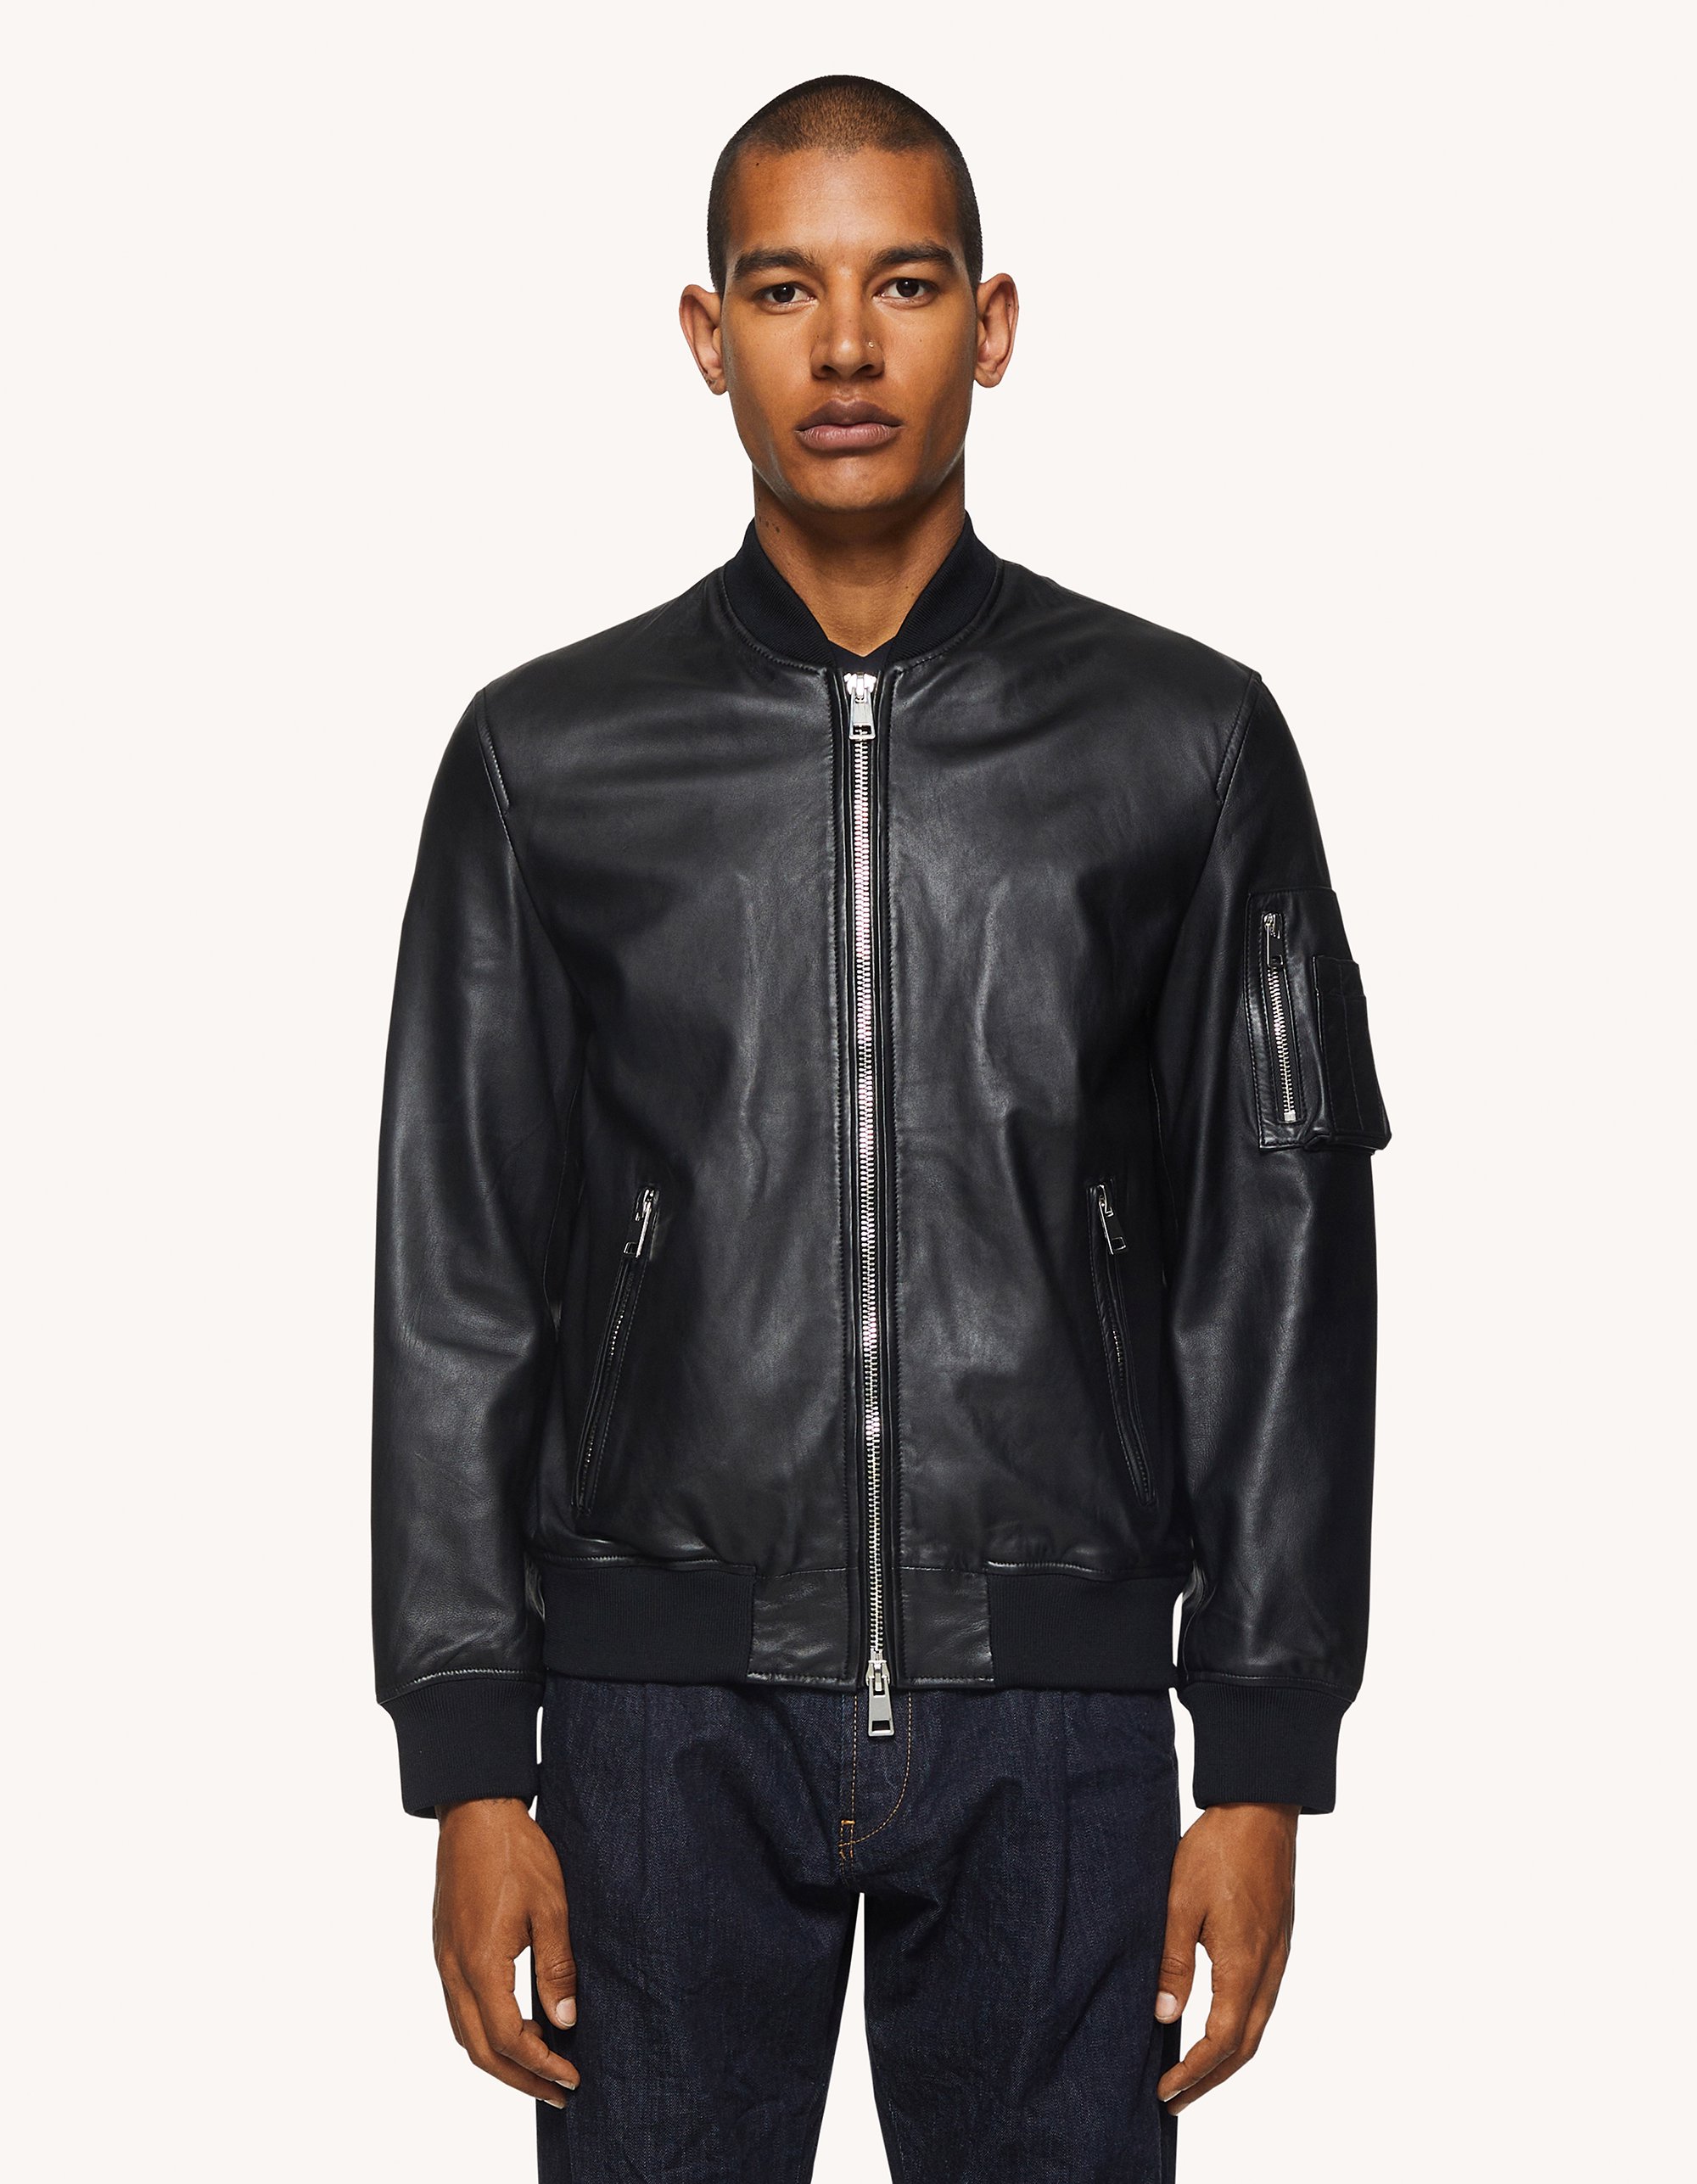 DOONDUPBomber jacket nappa leather